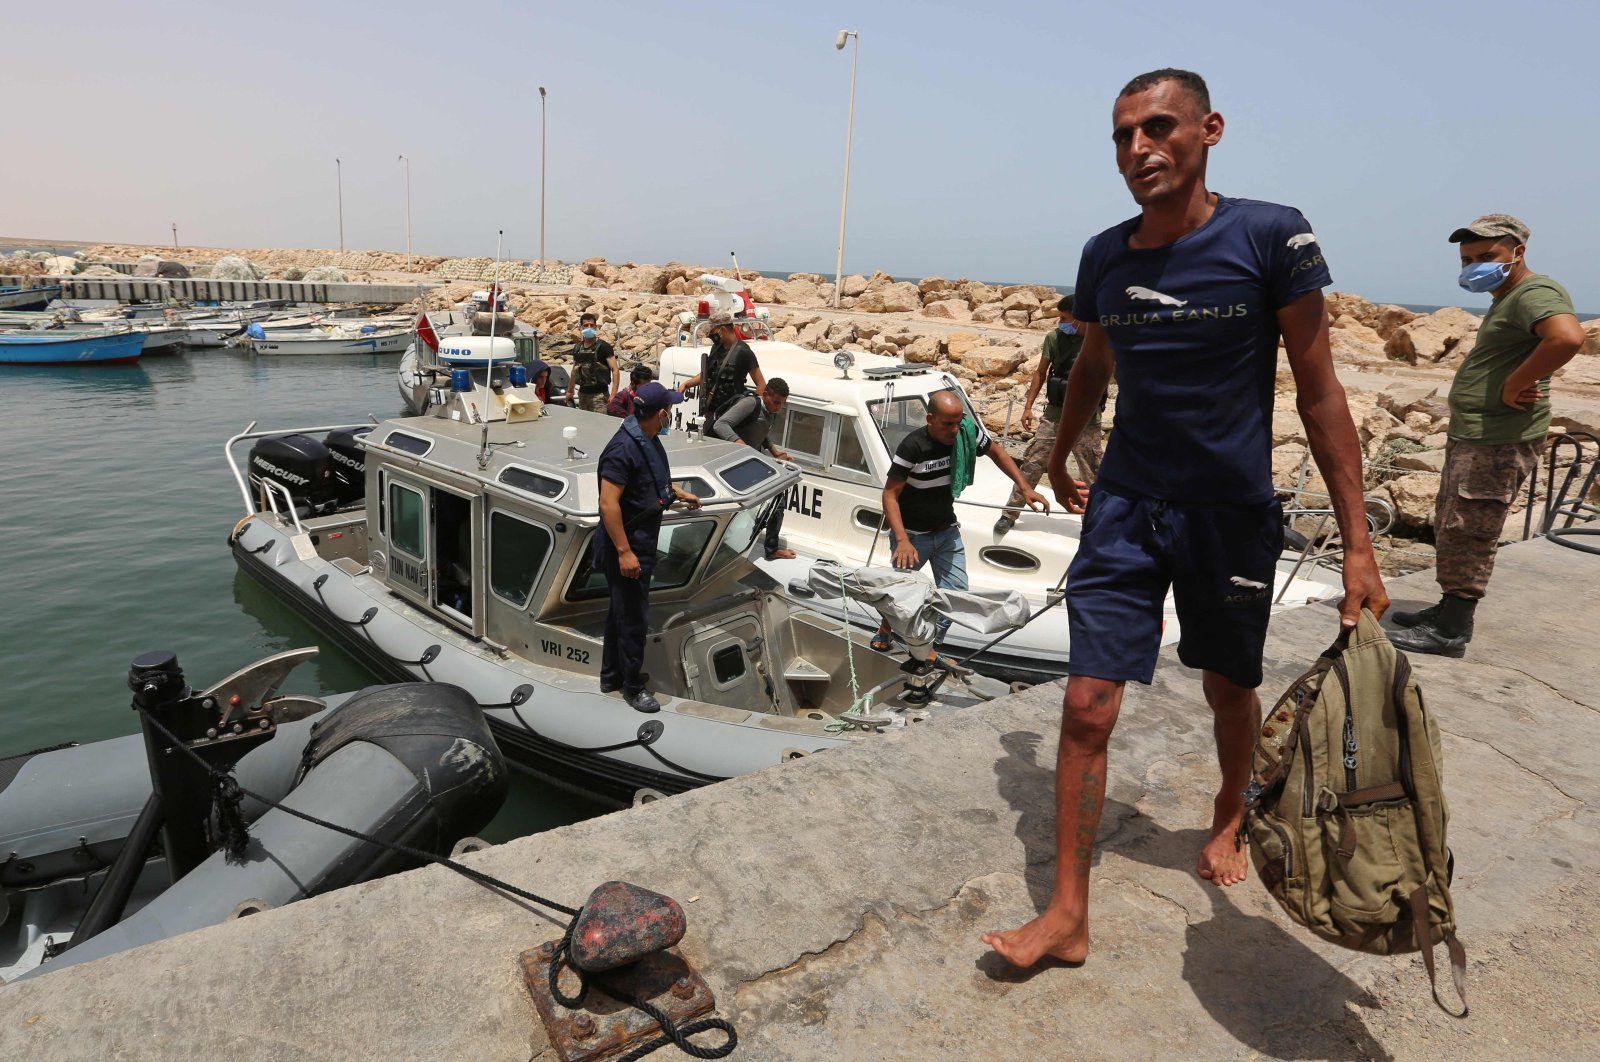 Boat with migrants capsizes off Tunisia, 43 killed